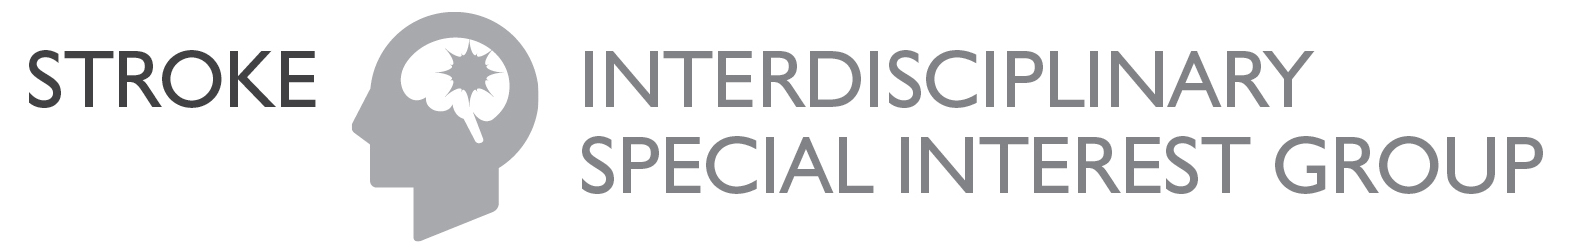 ACRM Stroke Interdisciplinary Special Interest Group